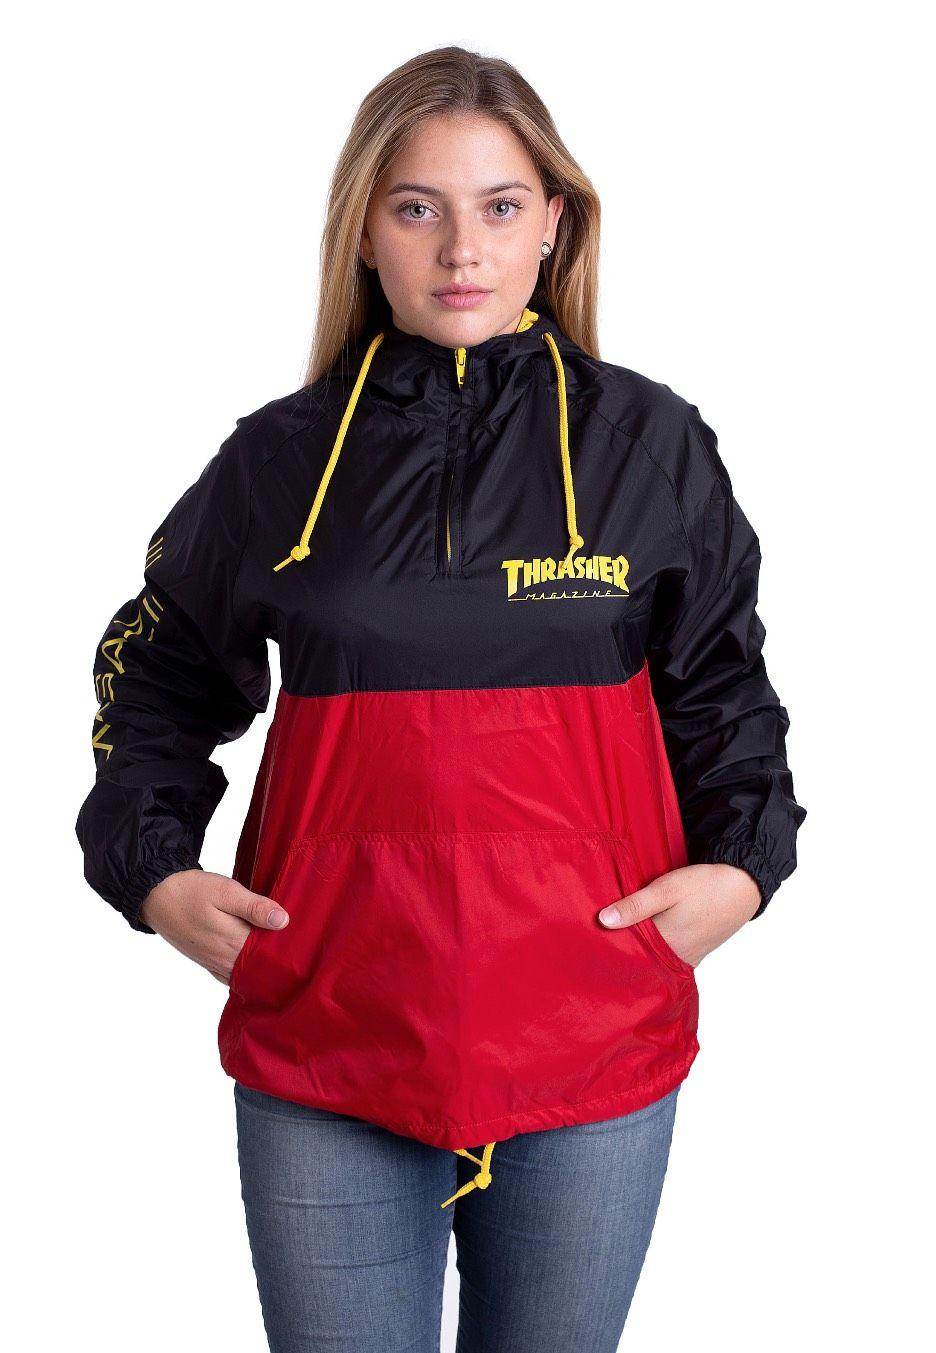 Thrasher Girl Logo - Thrasher - Mag Logo Black/Red - Jacket - Streetwear Shop - Impericon ...